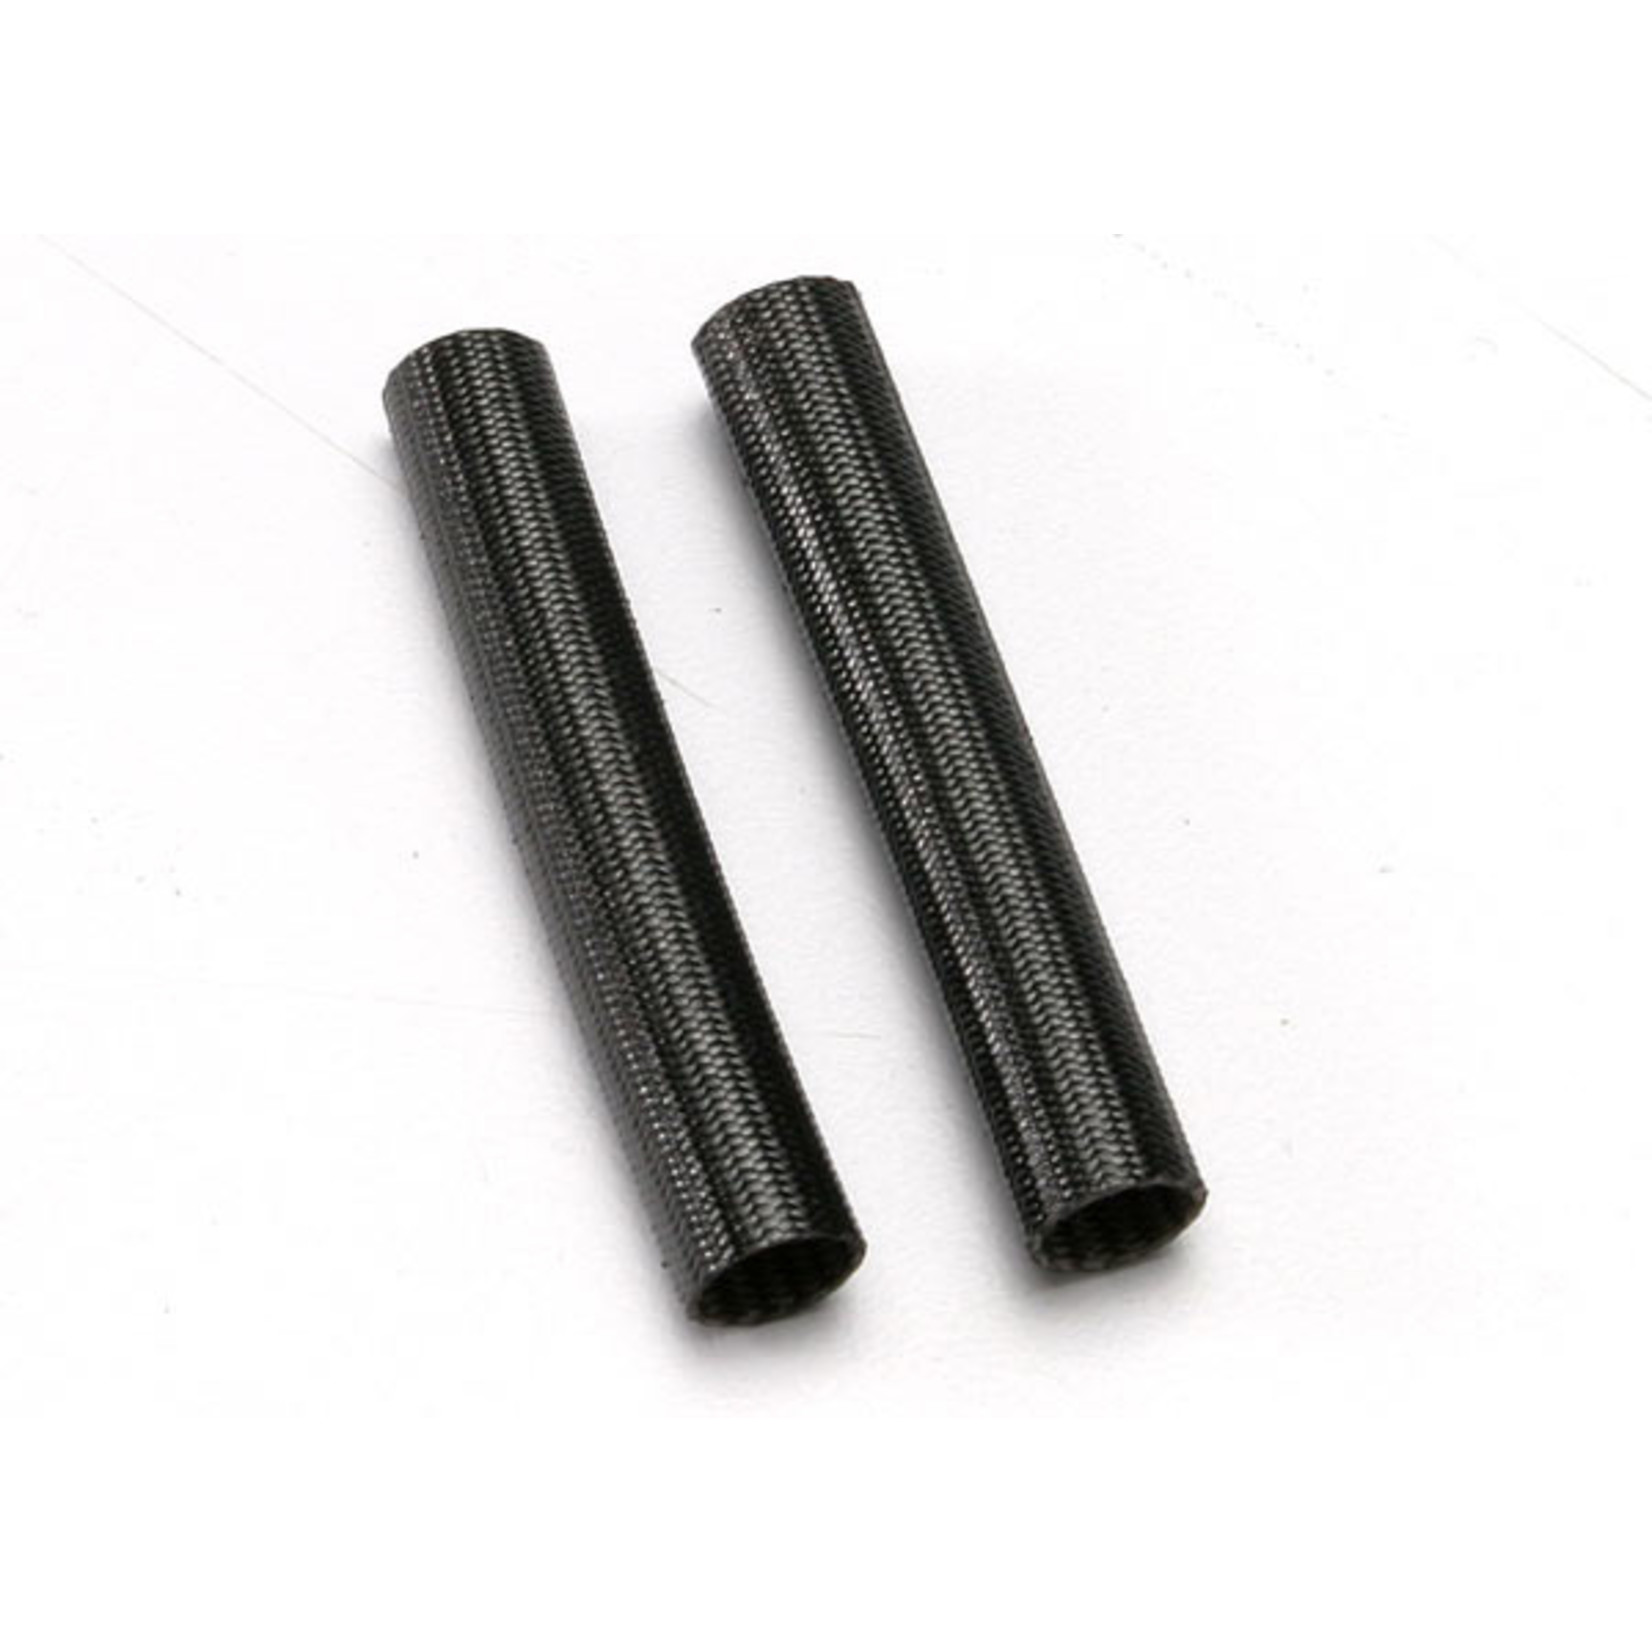 Traxxas 3149A - Heat shield tubing, fiberglass (2) (black)